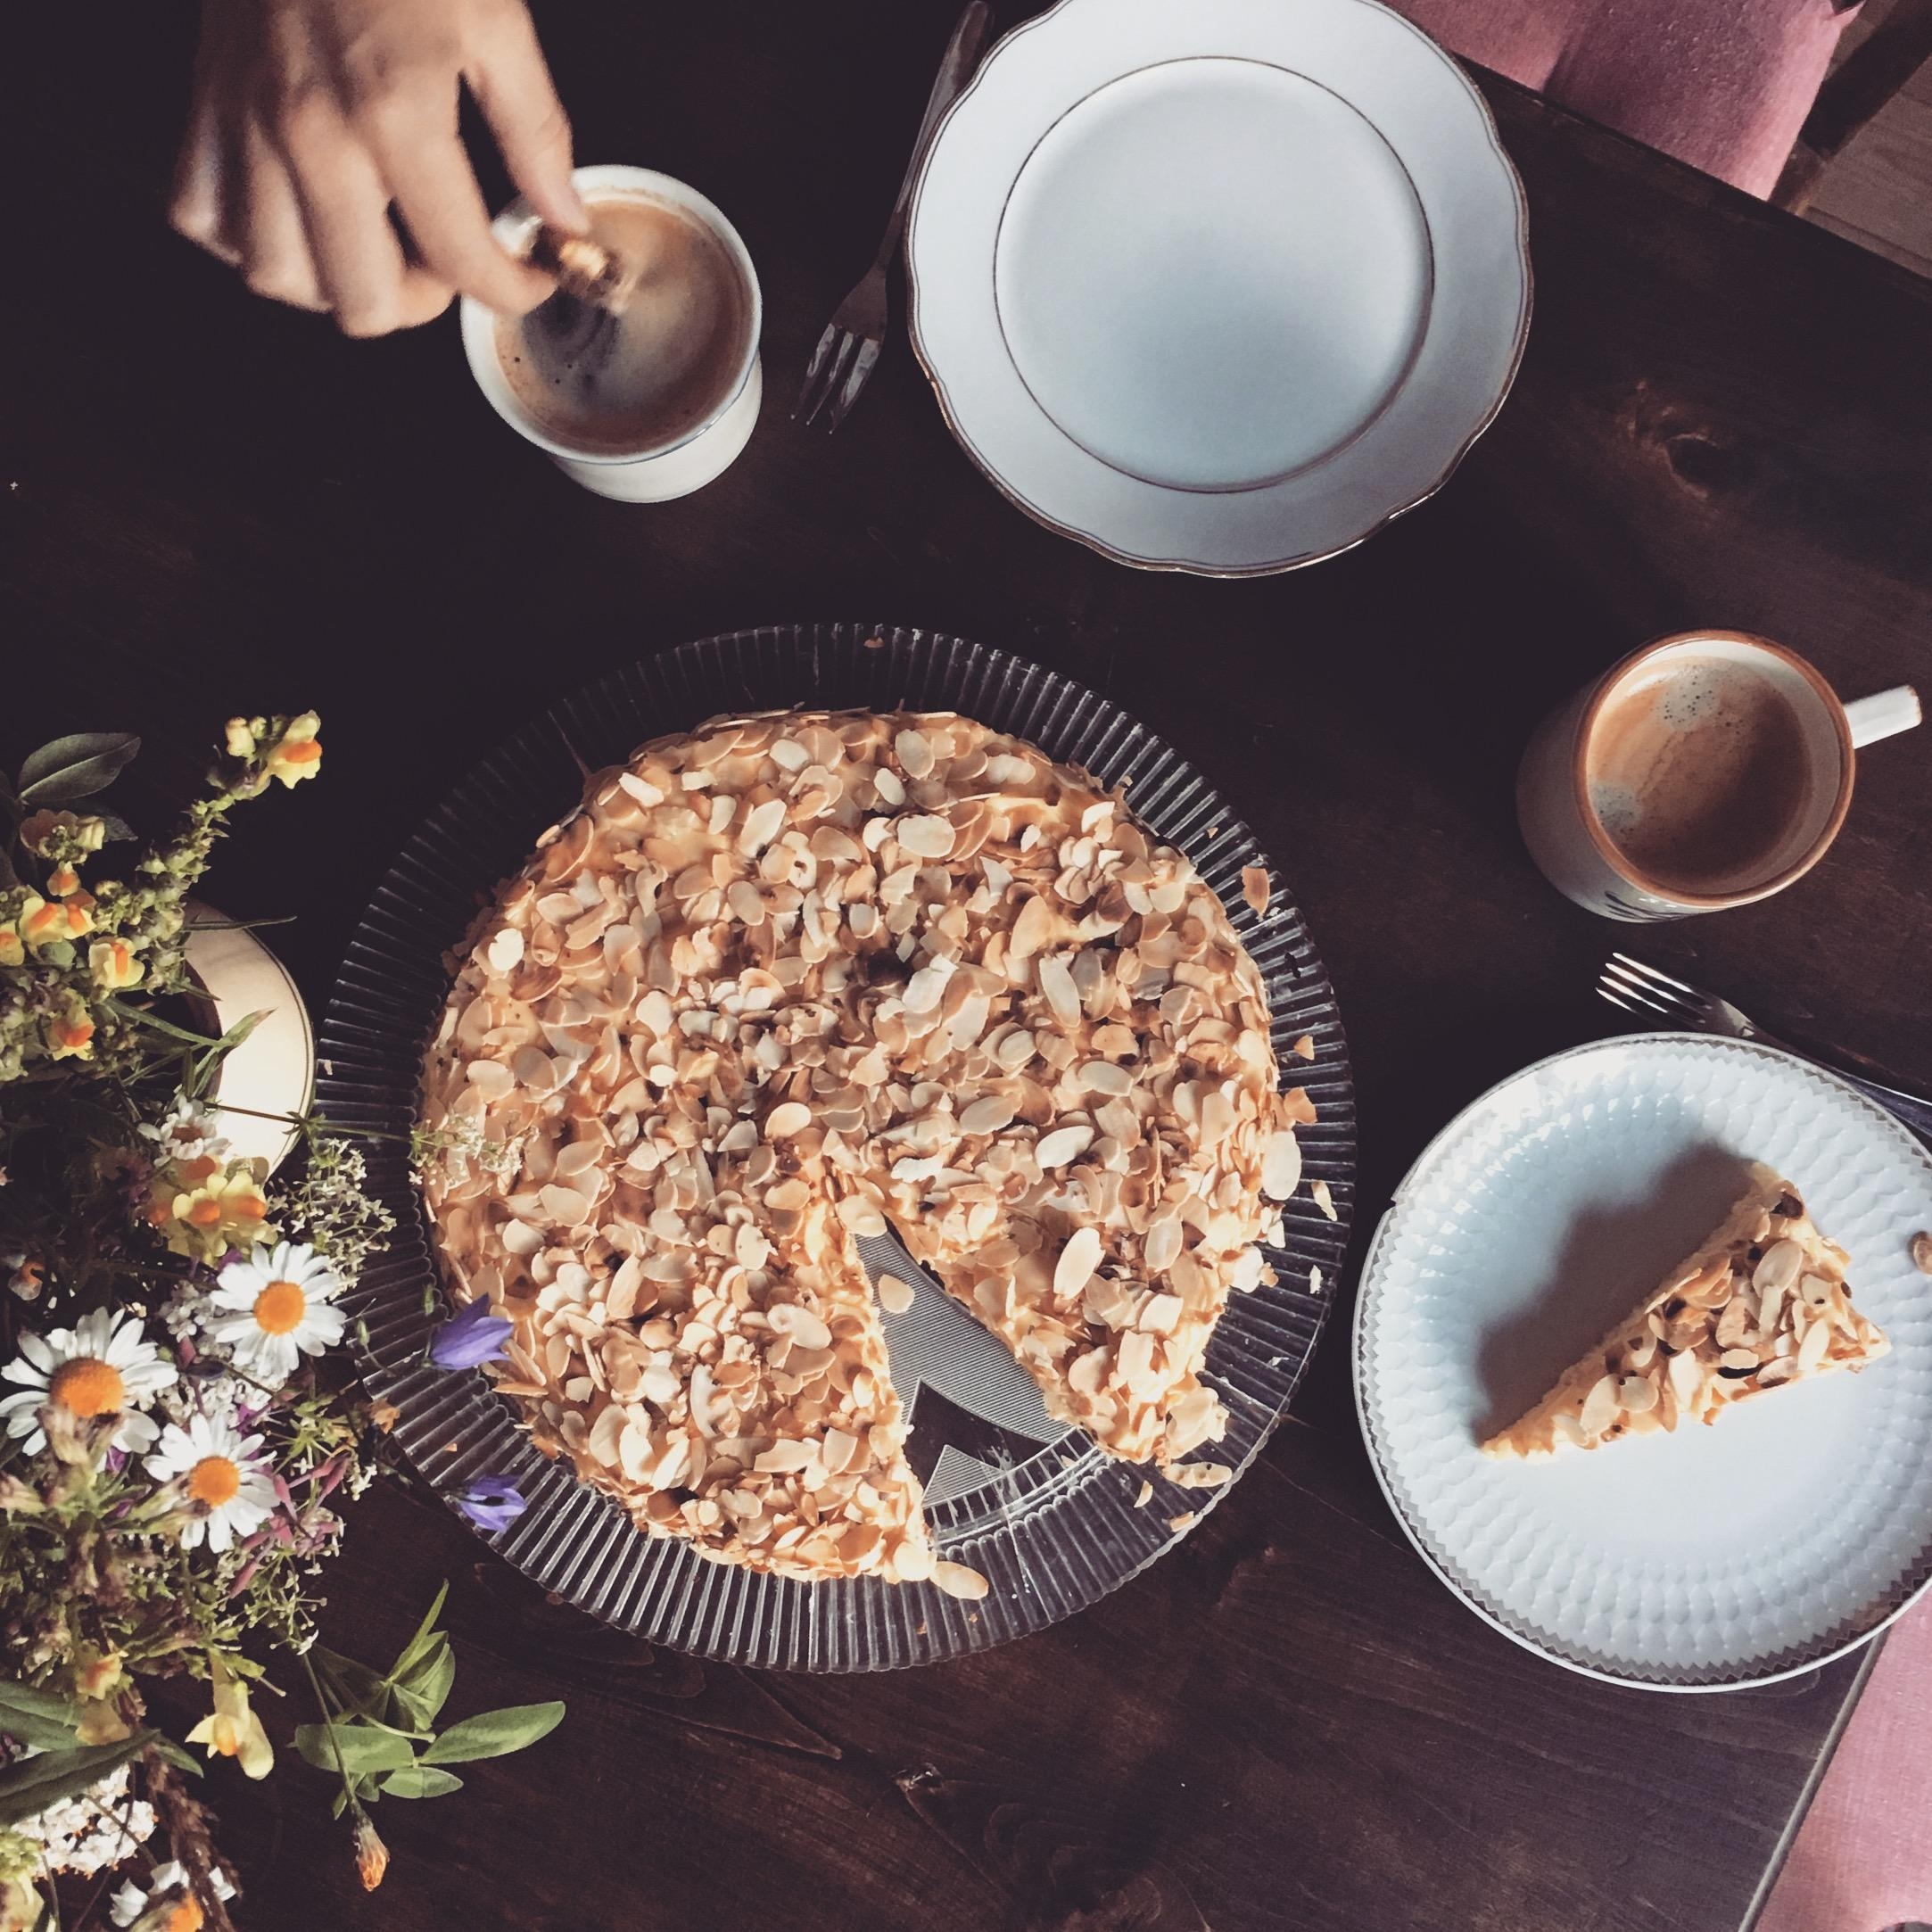 M A N D E L T Å R T A .
#mandeltårta #baking #vegan #mandeln #scandinavianstyle #hygge #fika 